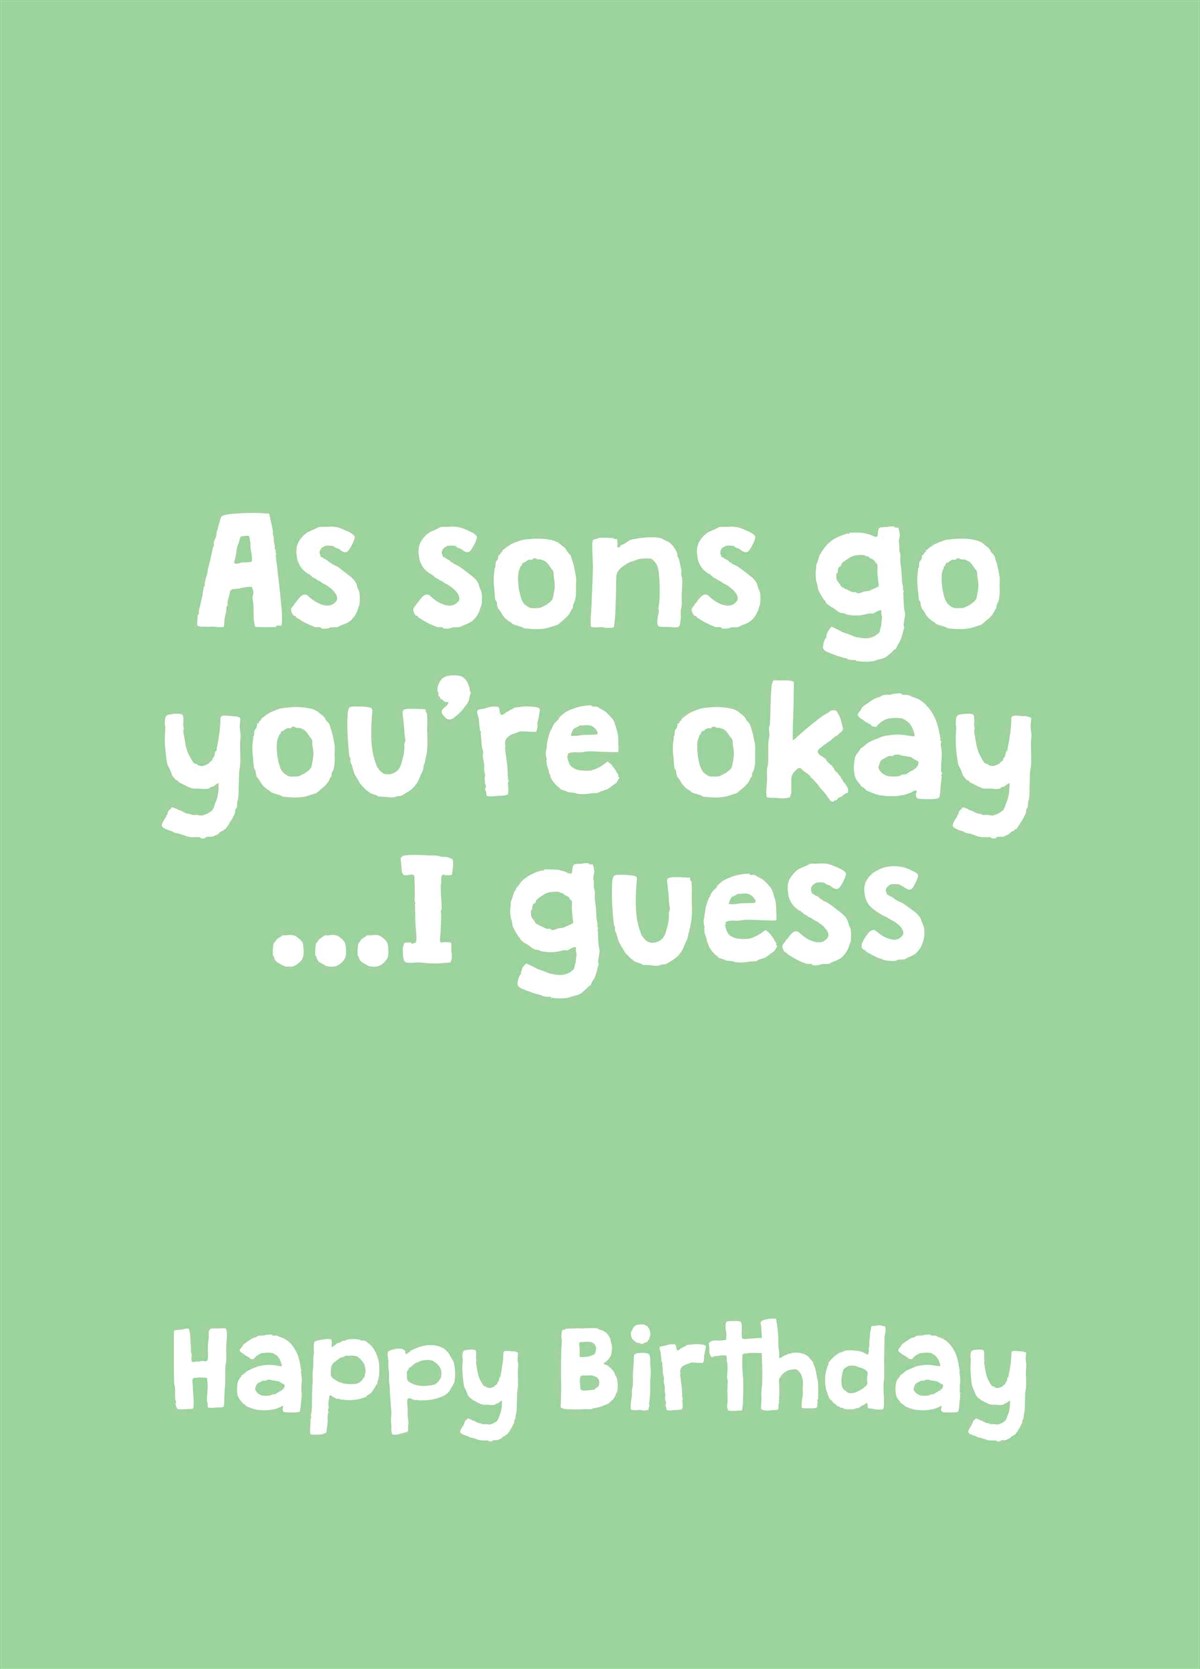 Son Birthday Cards - Funny & Rude Cards - Scribbler